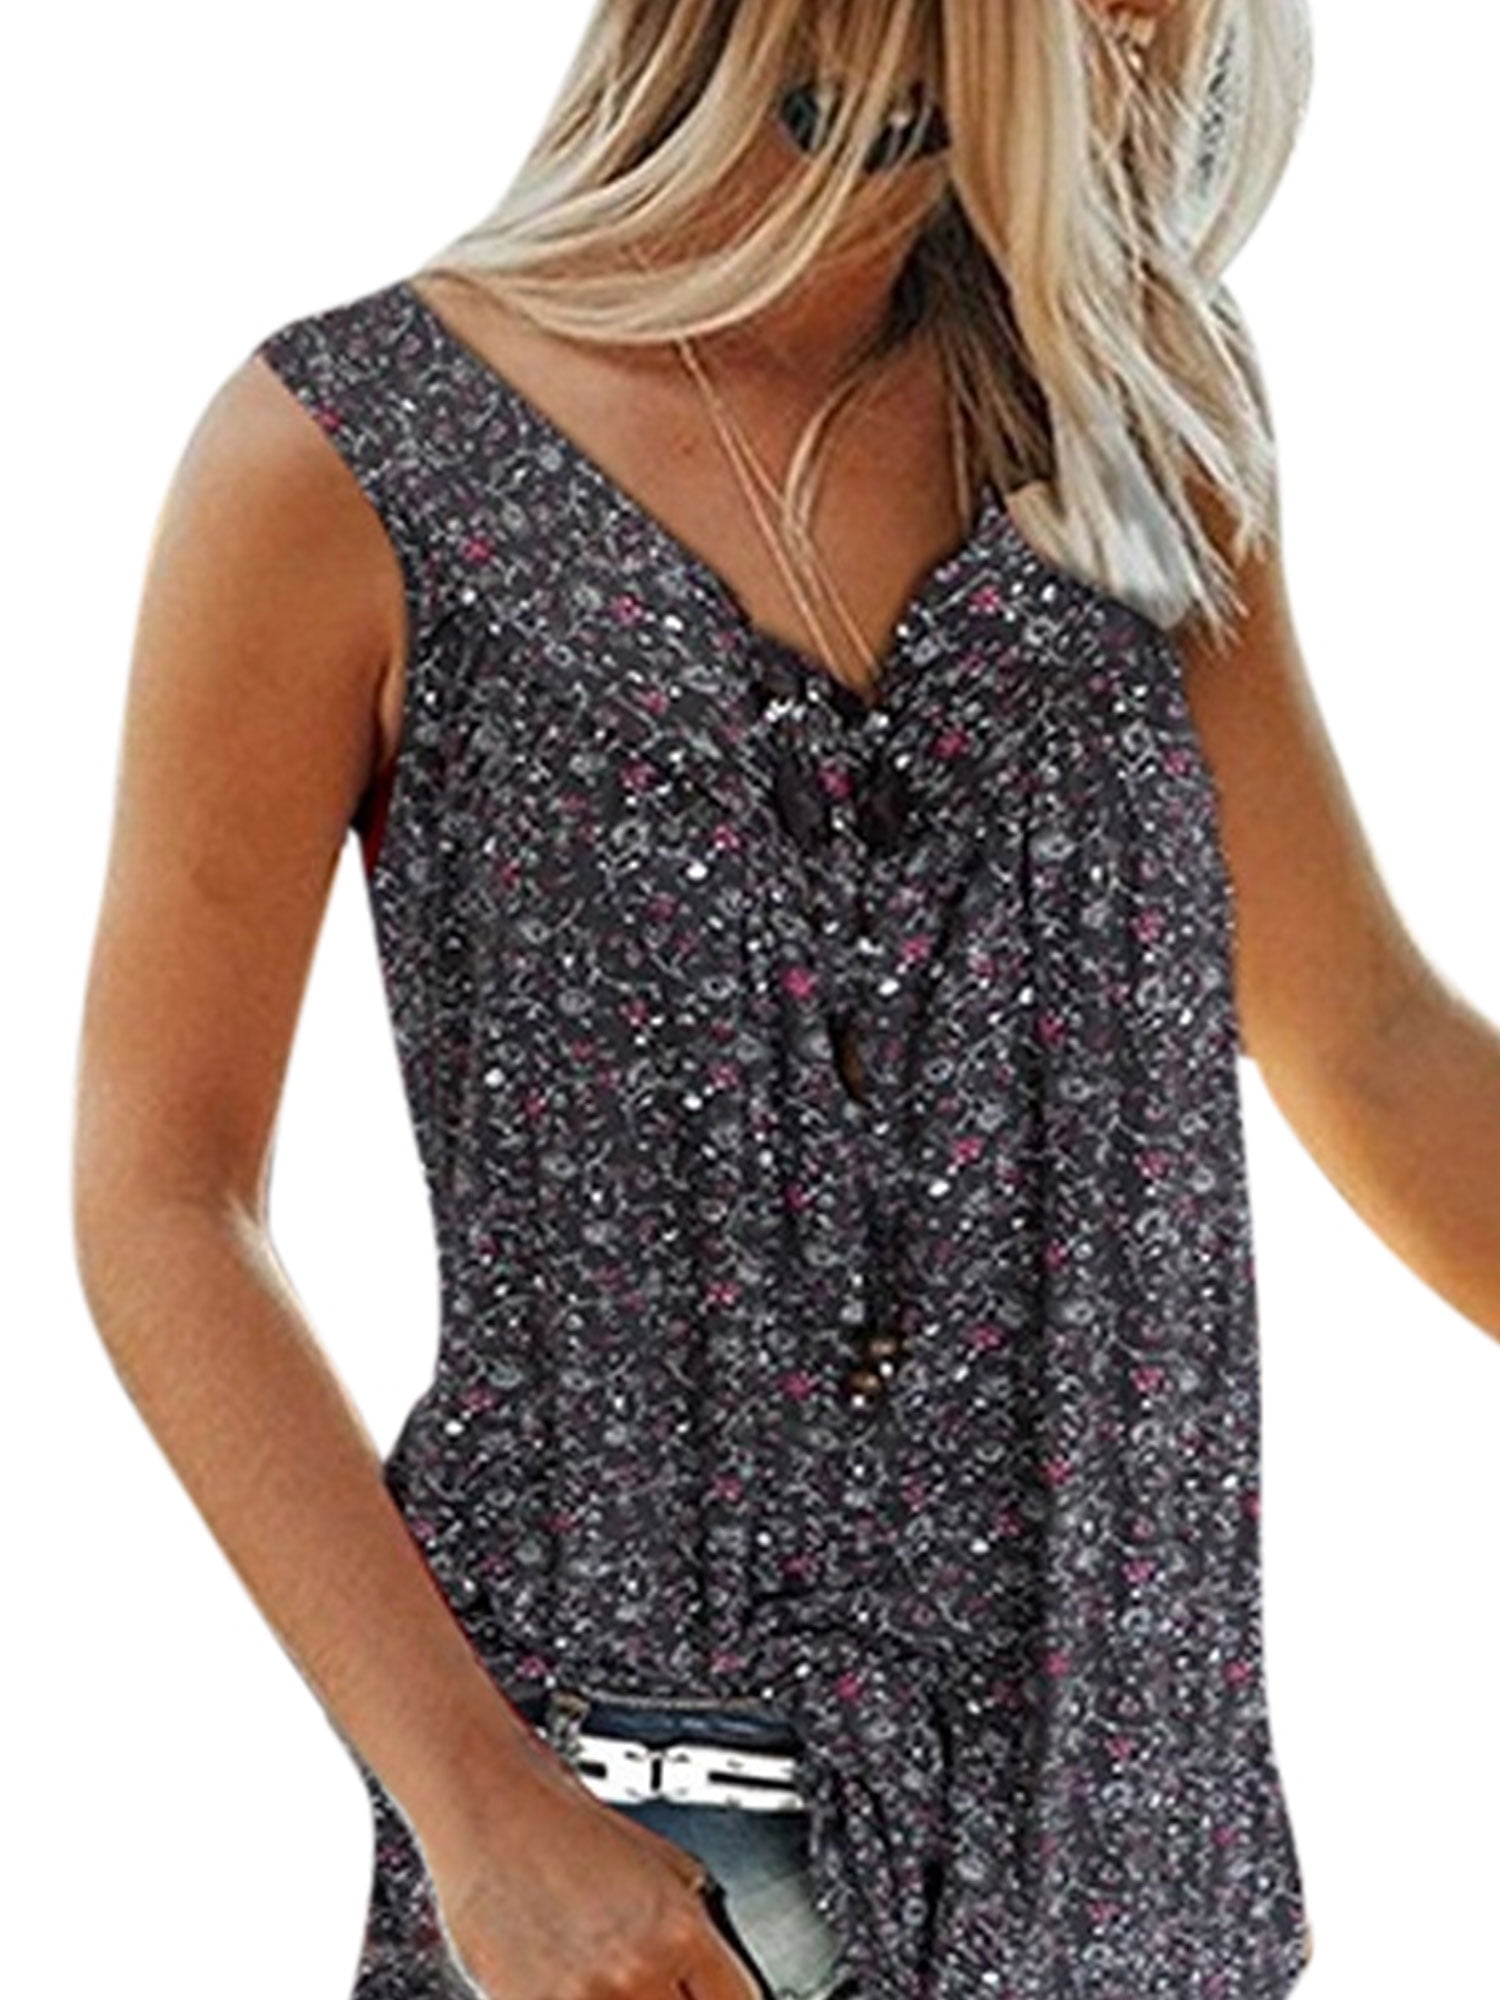 Hemlock Women Floral Printed Tops V Neck Camisole Sleeveless Vest Shirt Plus Size Tops Summer Crop Tops